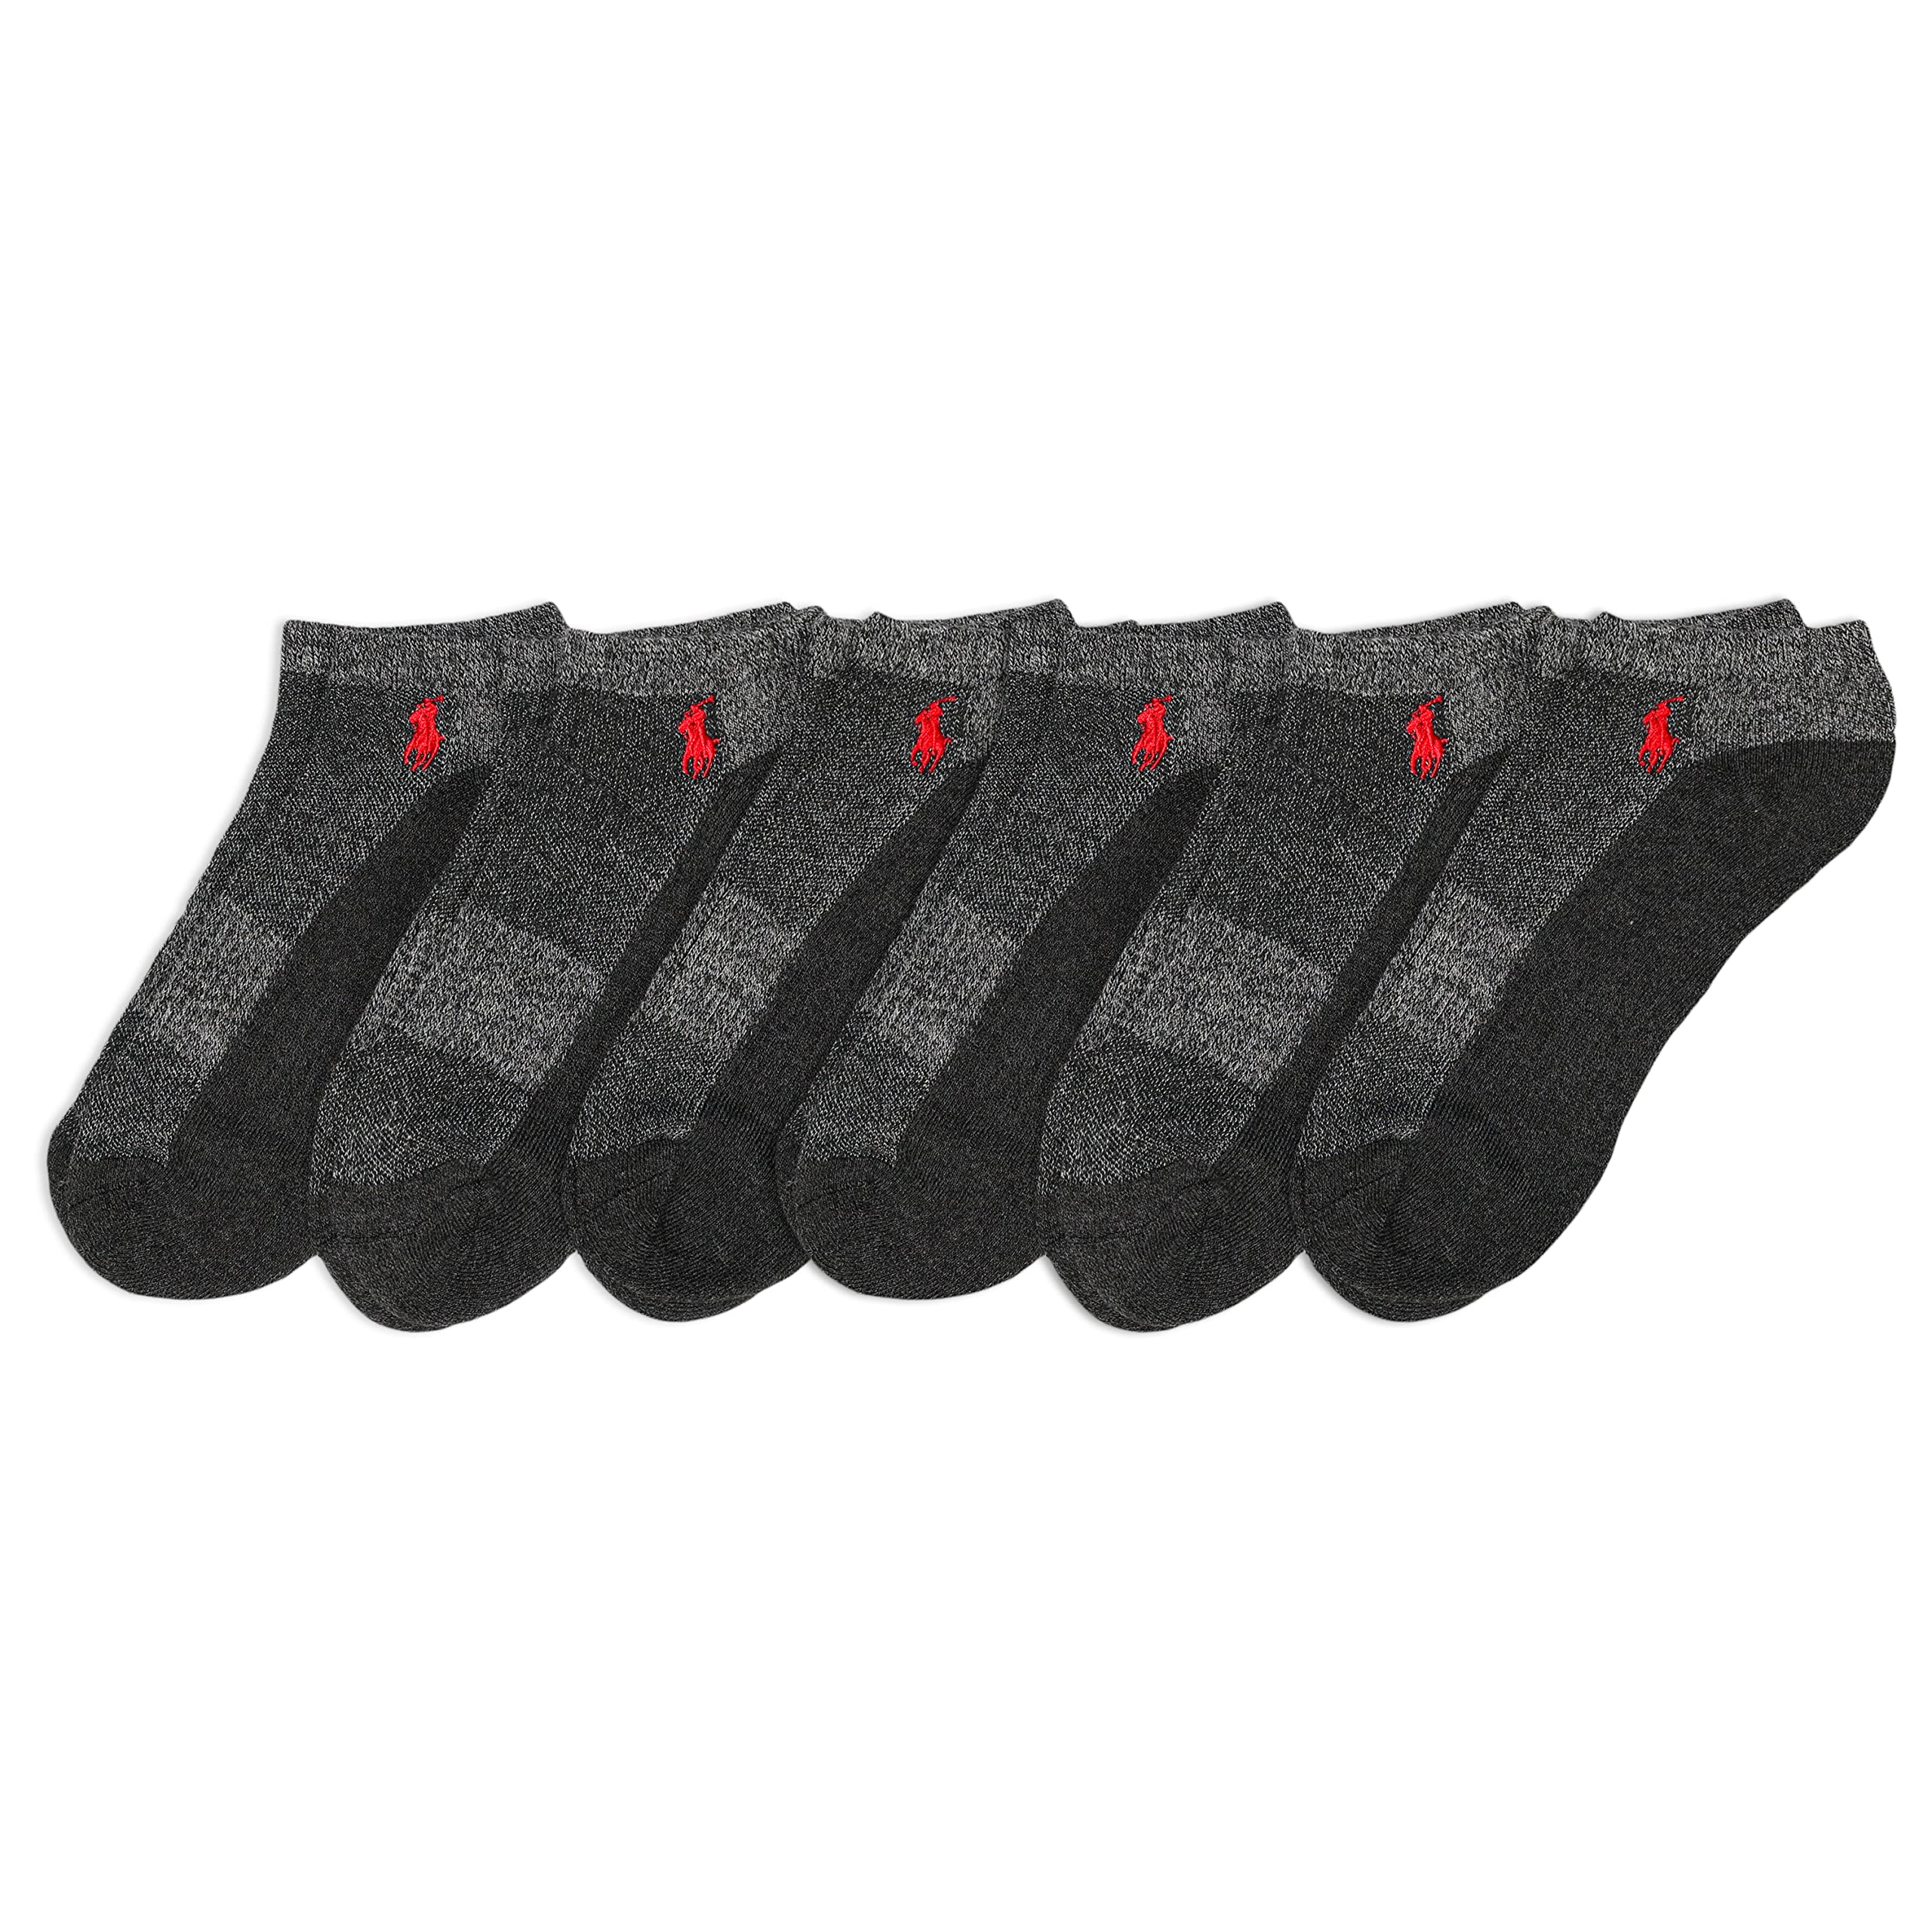 Mua POLO RALPH LAUREN Men's Classic Sport Marled Socks 6 Pair Pack -  Breathable Mesh and Arch Support, Gray,  trên Amazon Mỹ chính hãng  2023 | Giaonhan247